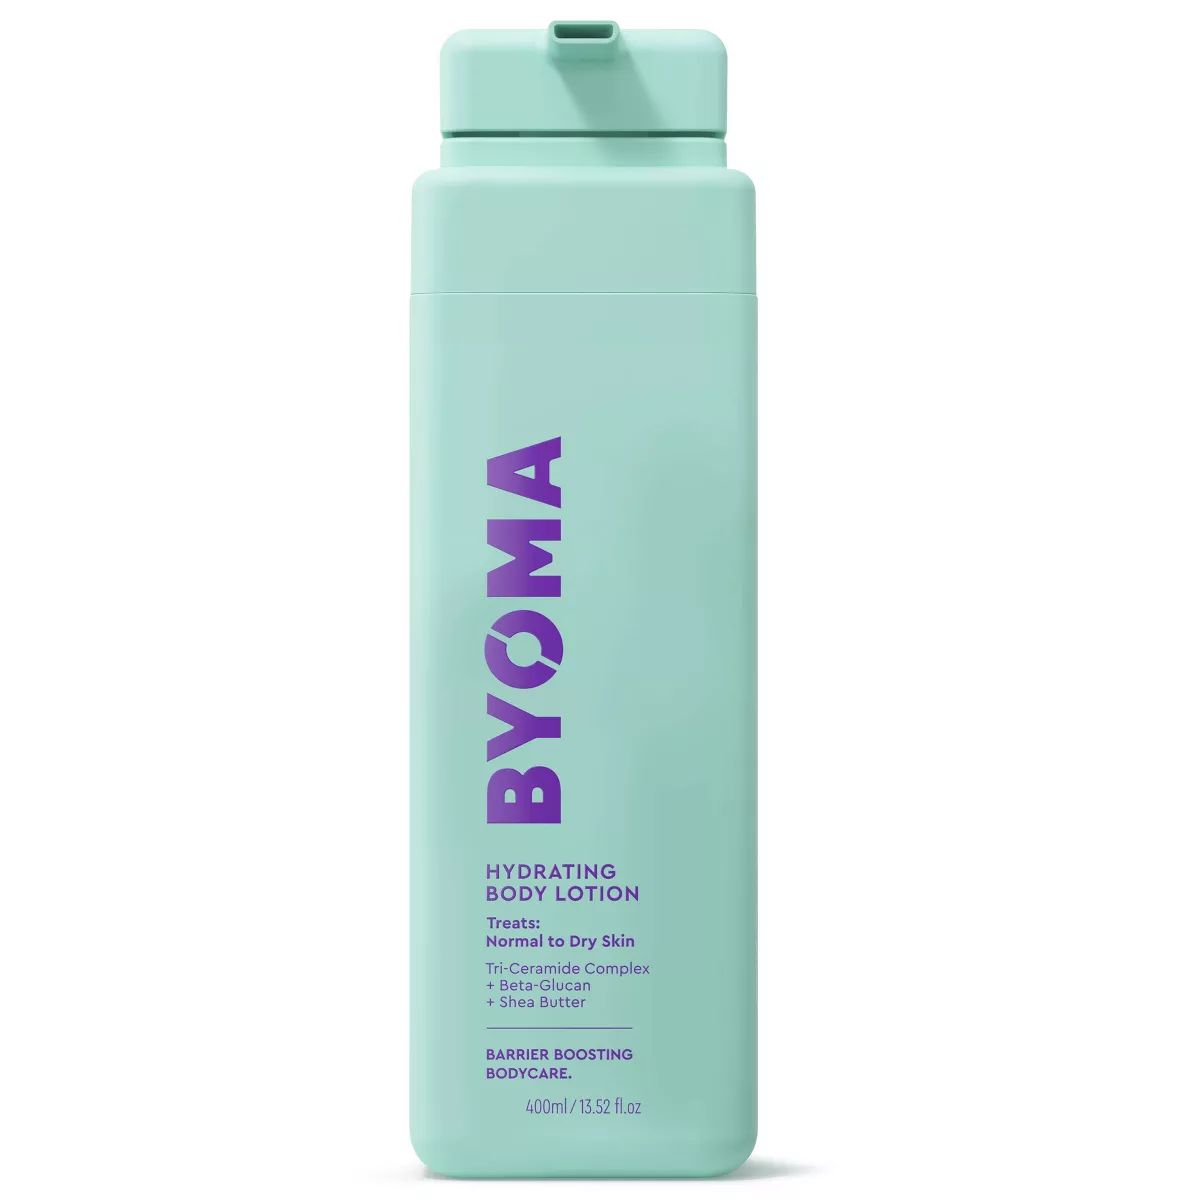 BYOMA Hydrating Body Lotion 13.52 fl oz | Target